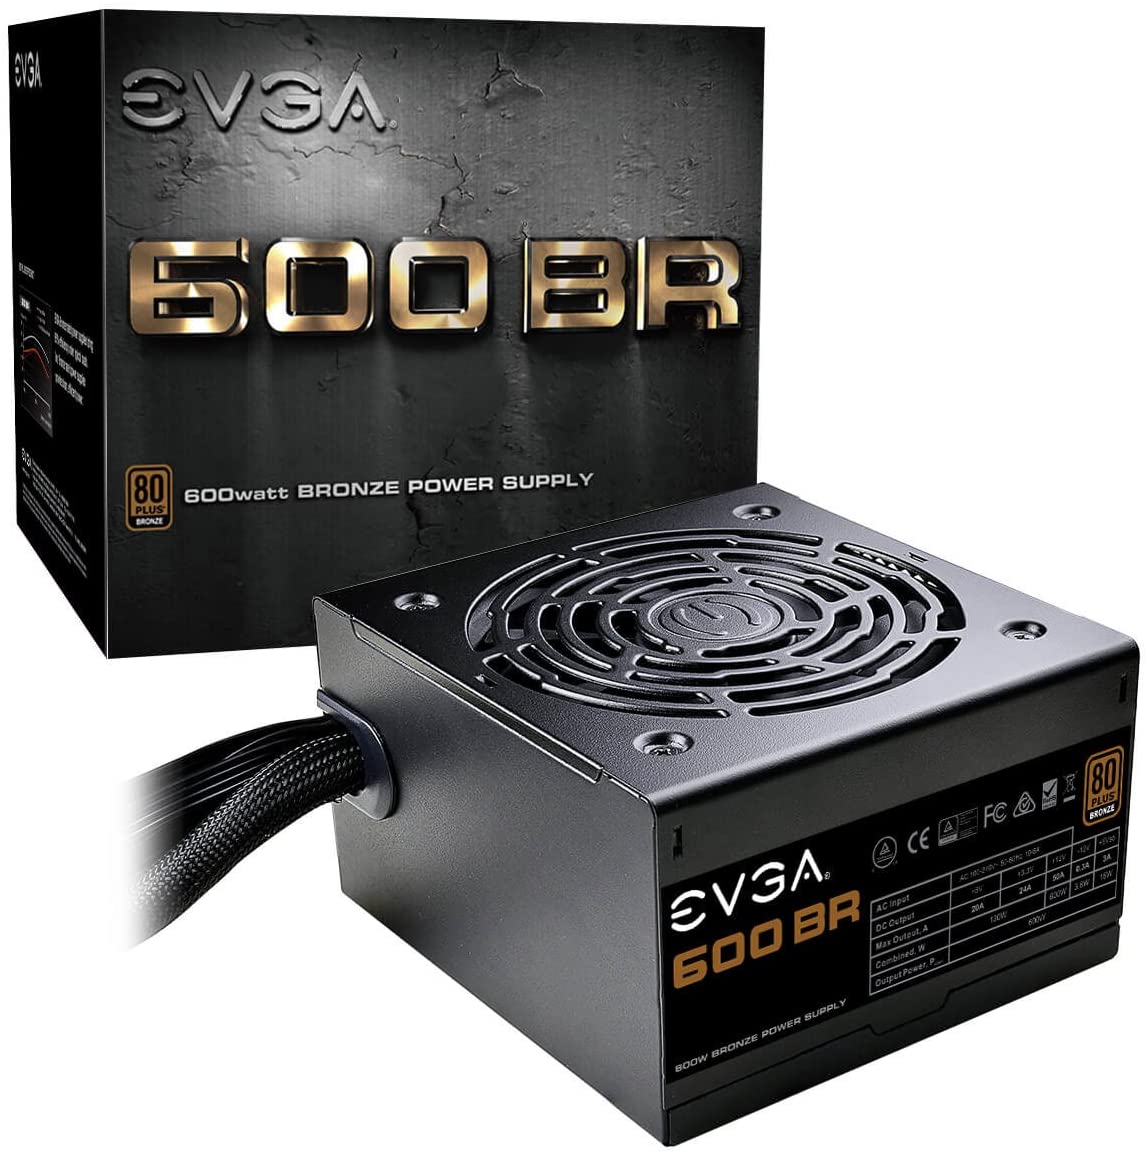 600W EVGA 600 BR, 80+ Bronze Power Supply @ Amazon $45